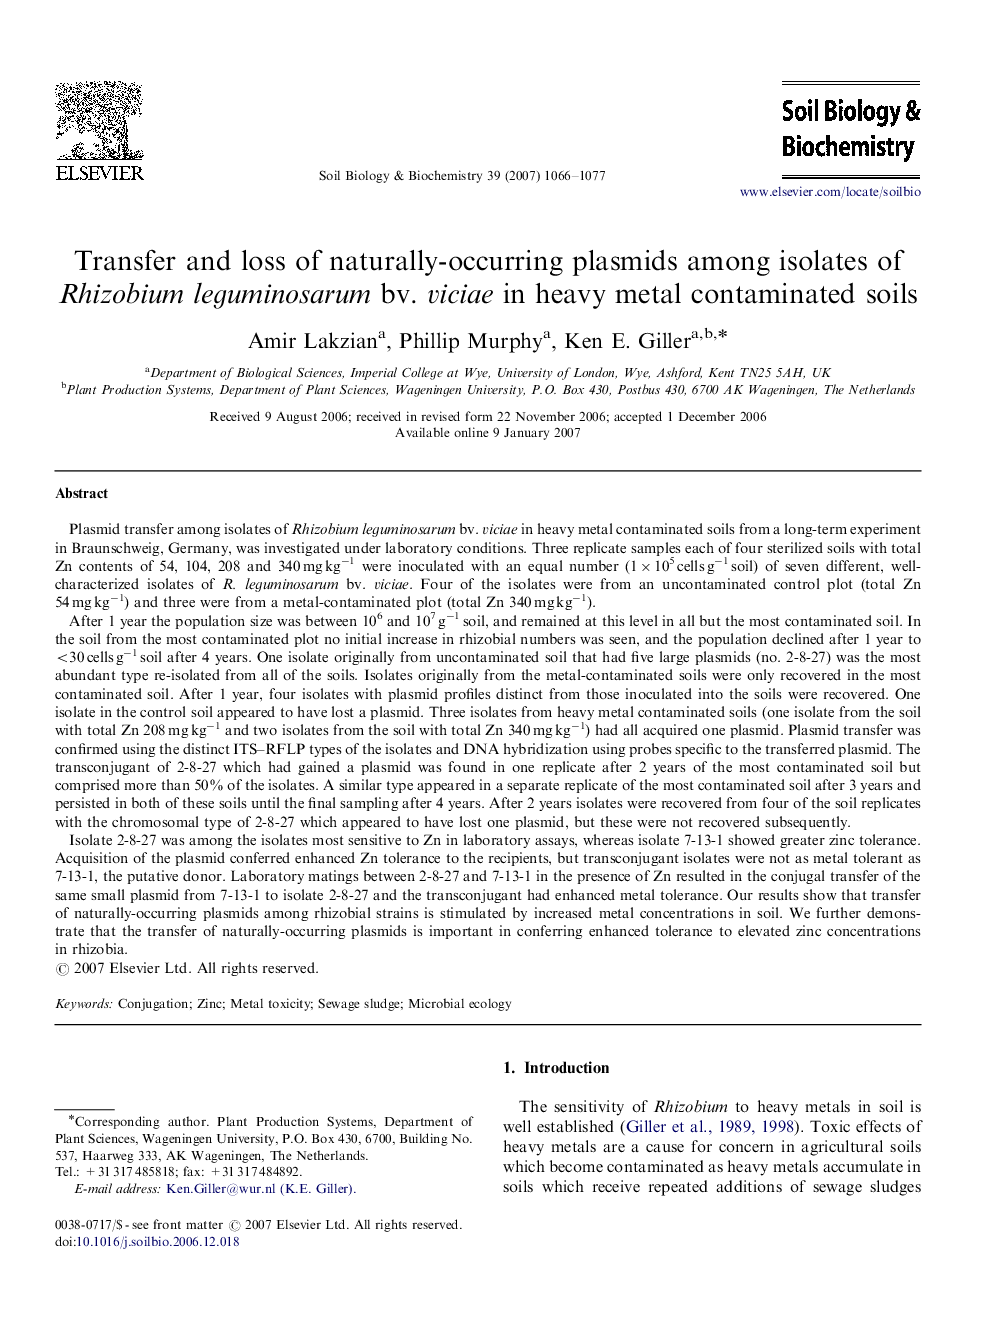 Transfer and loss of naturally-occurring plasmids among isolates of Rhizobium leguminosarum bv. viciae in heavy metal contaminated soils